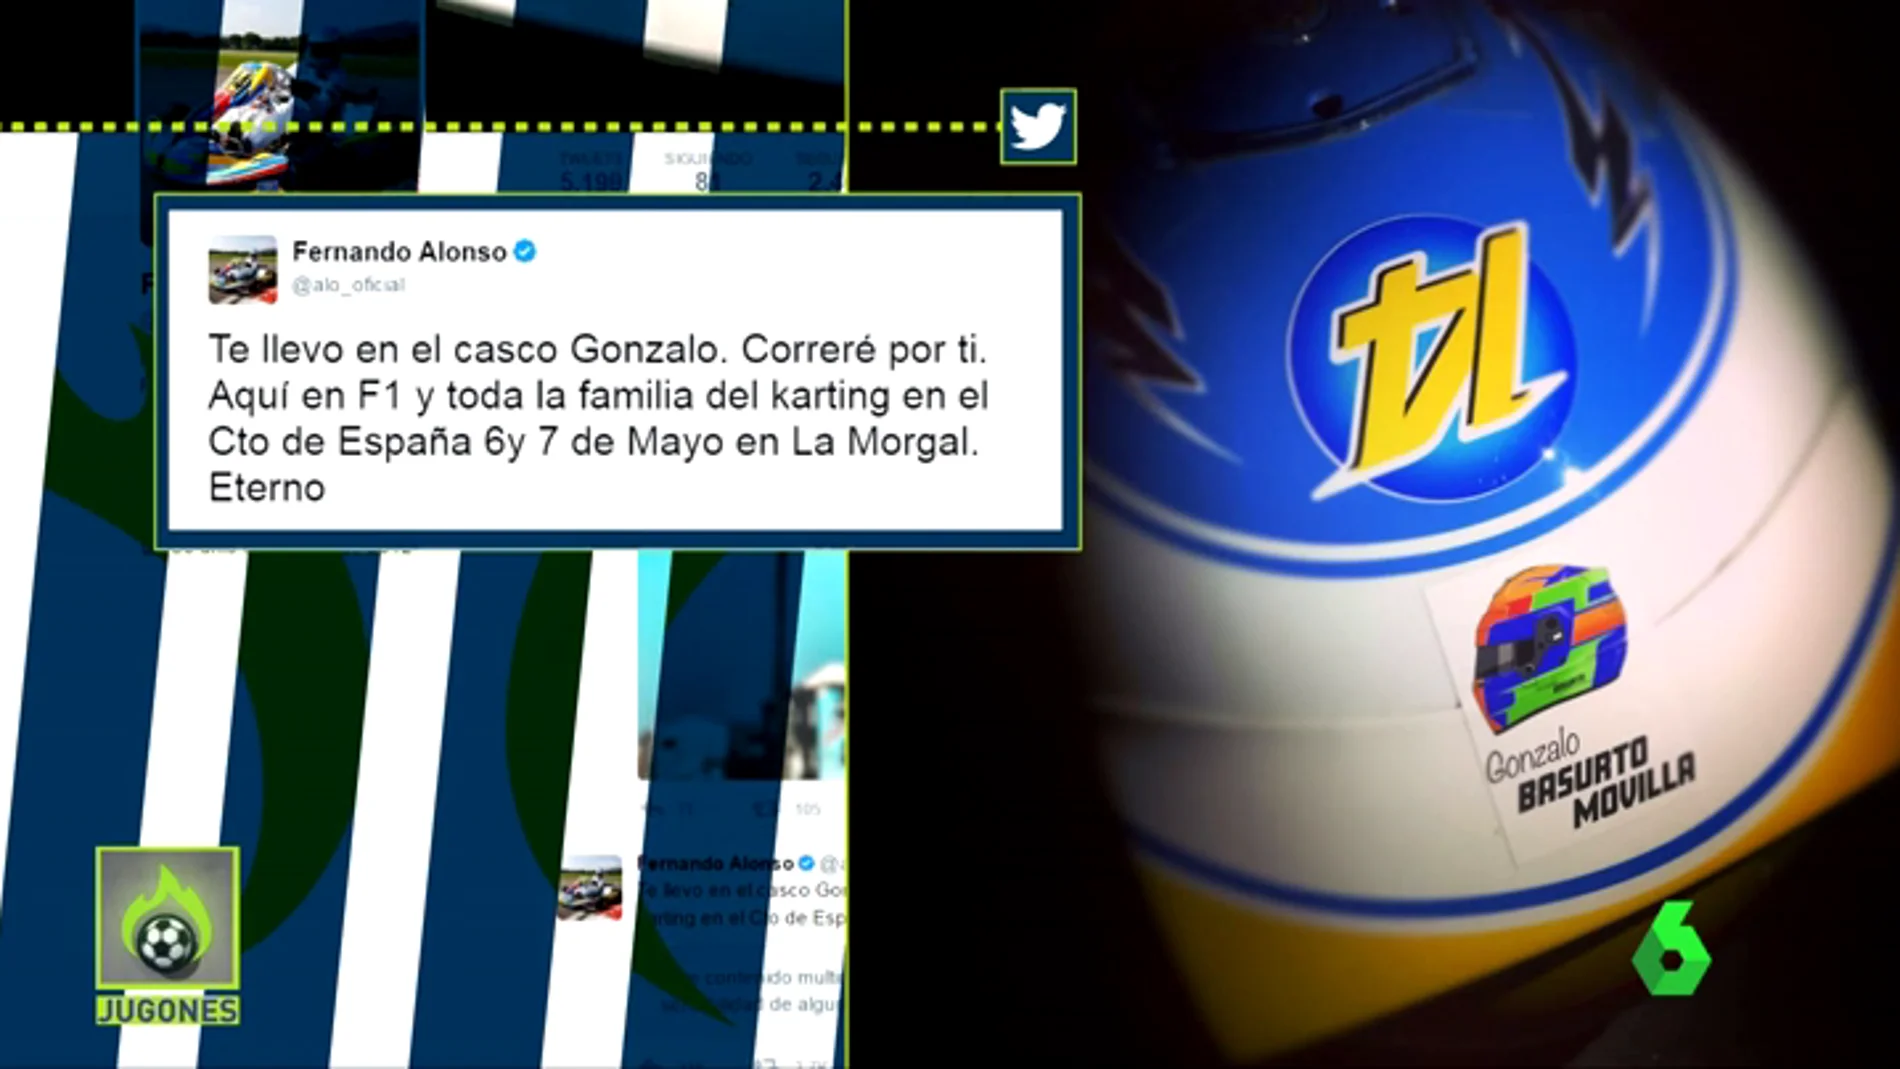 Frame 12.268202 de: "Correré por ti": Fernando Alonso homenajea a Gonzalo Basurto en su casco con un emotivo mensaje